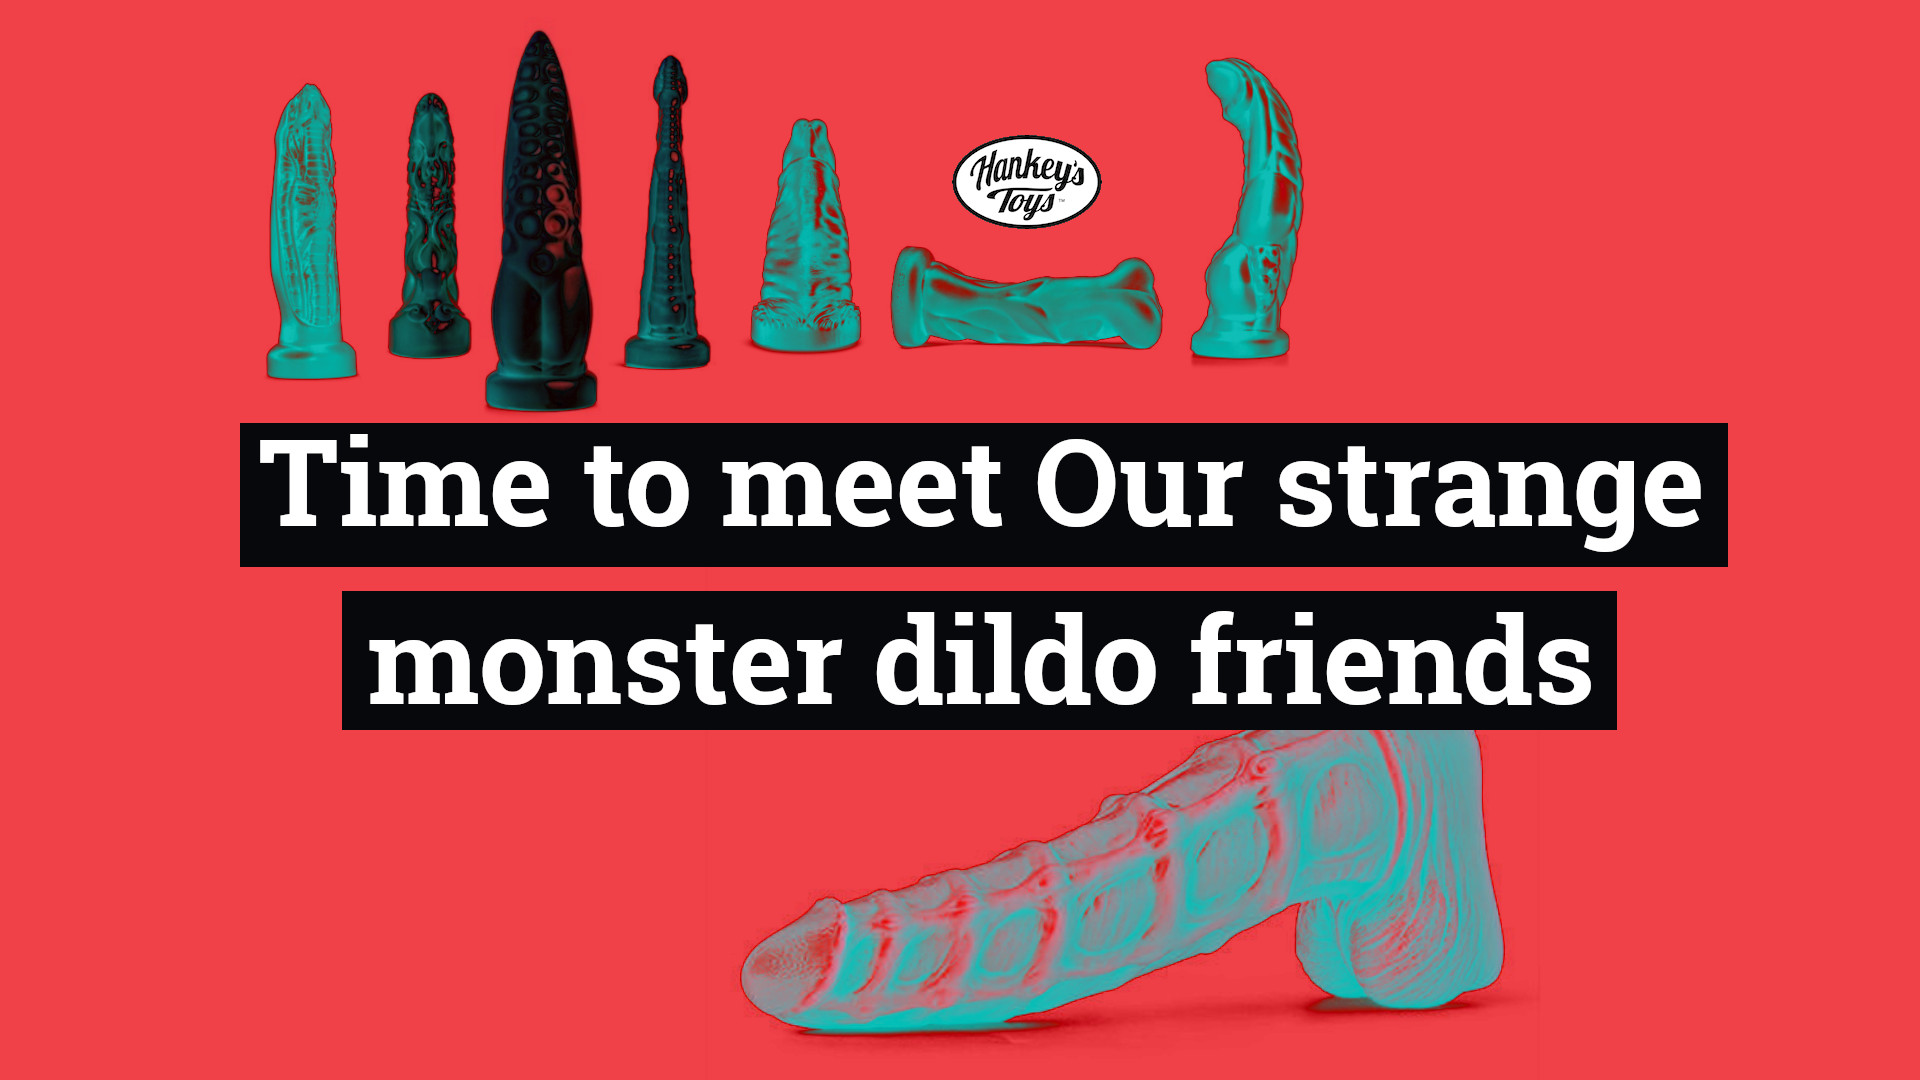 Mr. Hankey’s Toys Fantasy and Sci-Fi dildos – Time to meet Our strange monster dildo friends